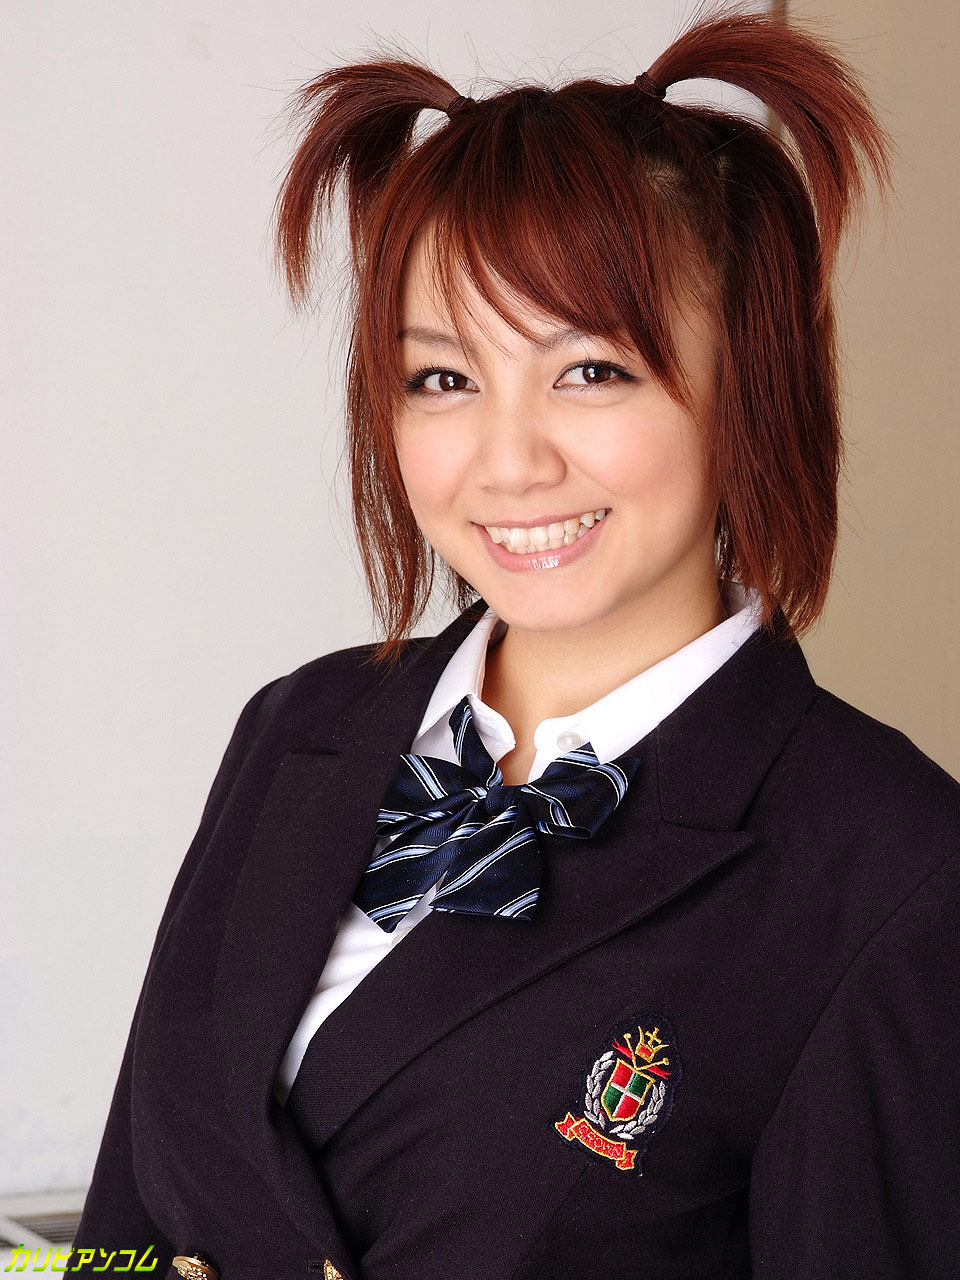 Japanese schoolgirl with pigtails Meguru Kosaka poses in her student uniform